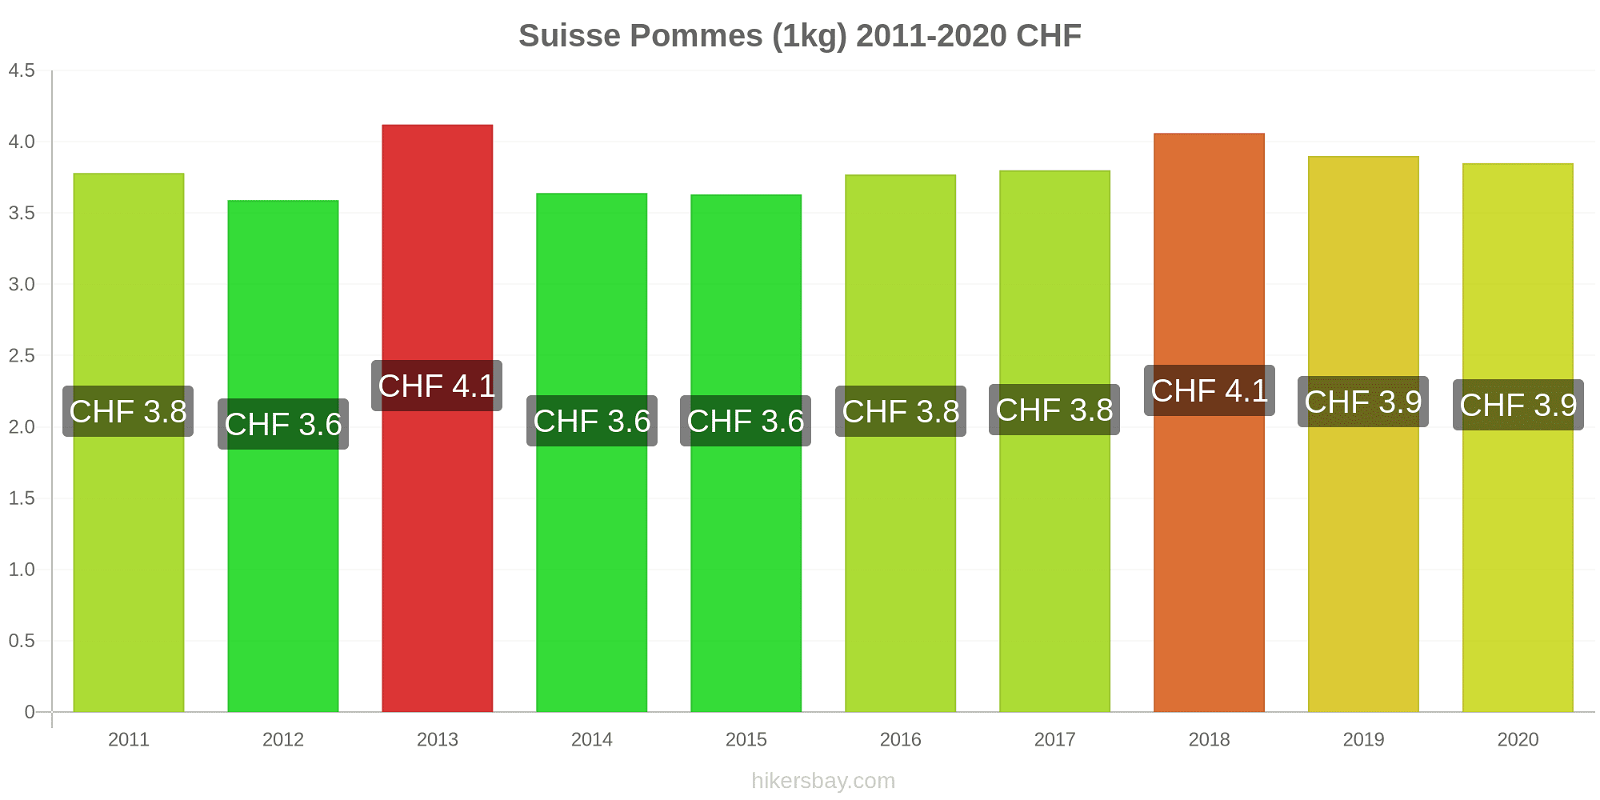 Suisse changements de prix Pommes (1kg) hikersbay.com